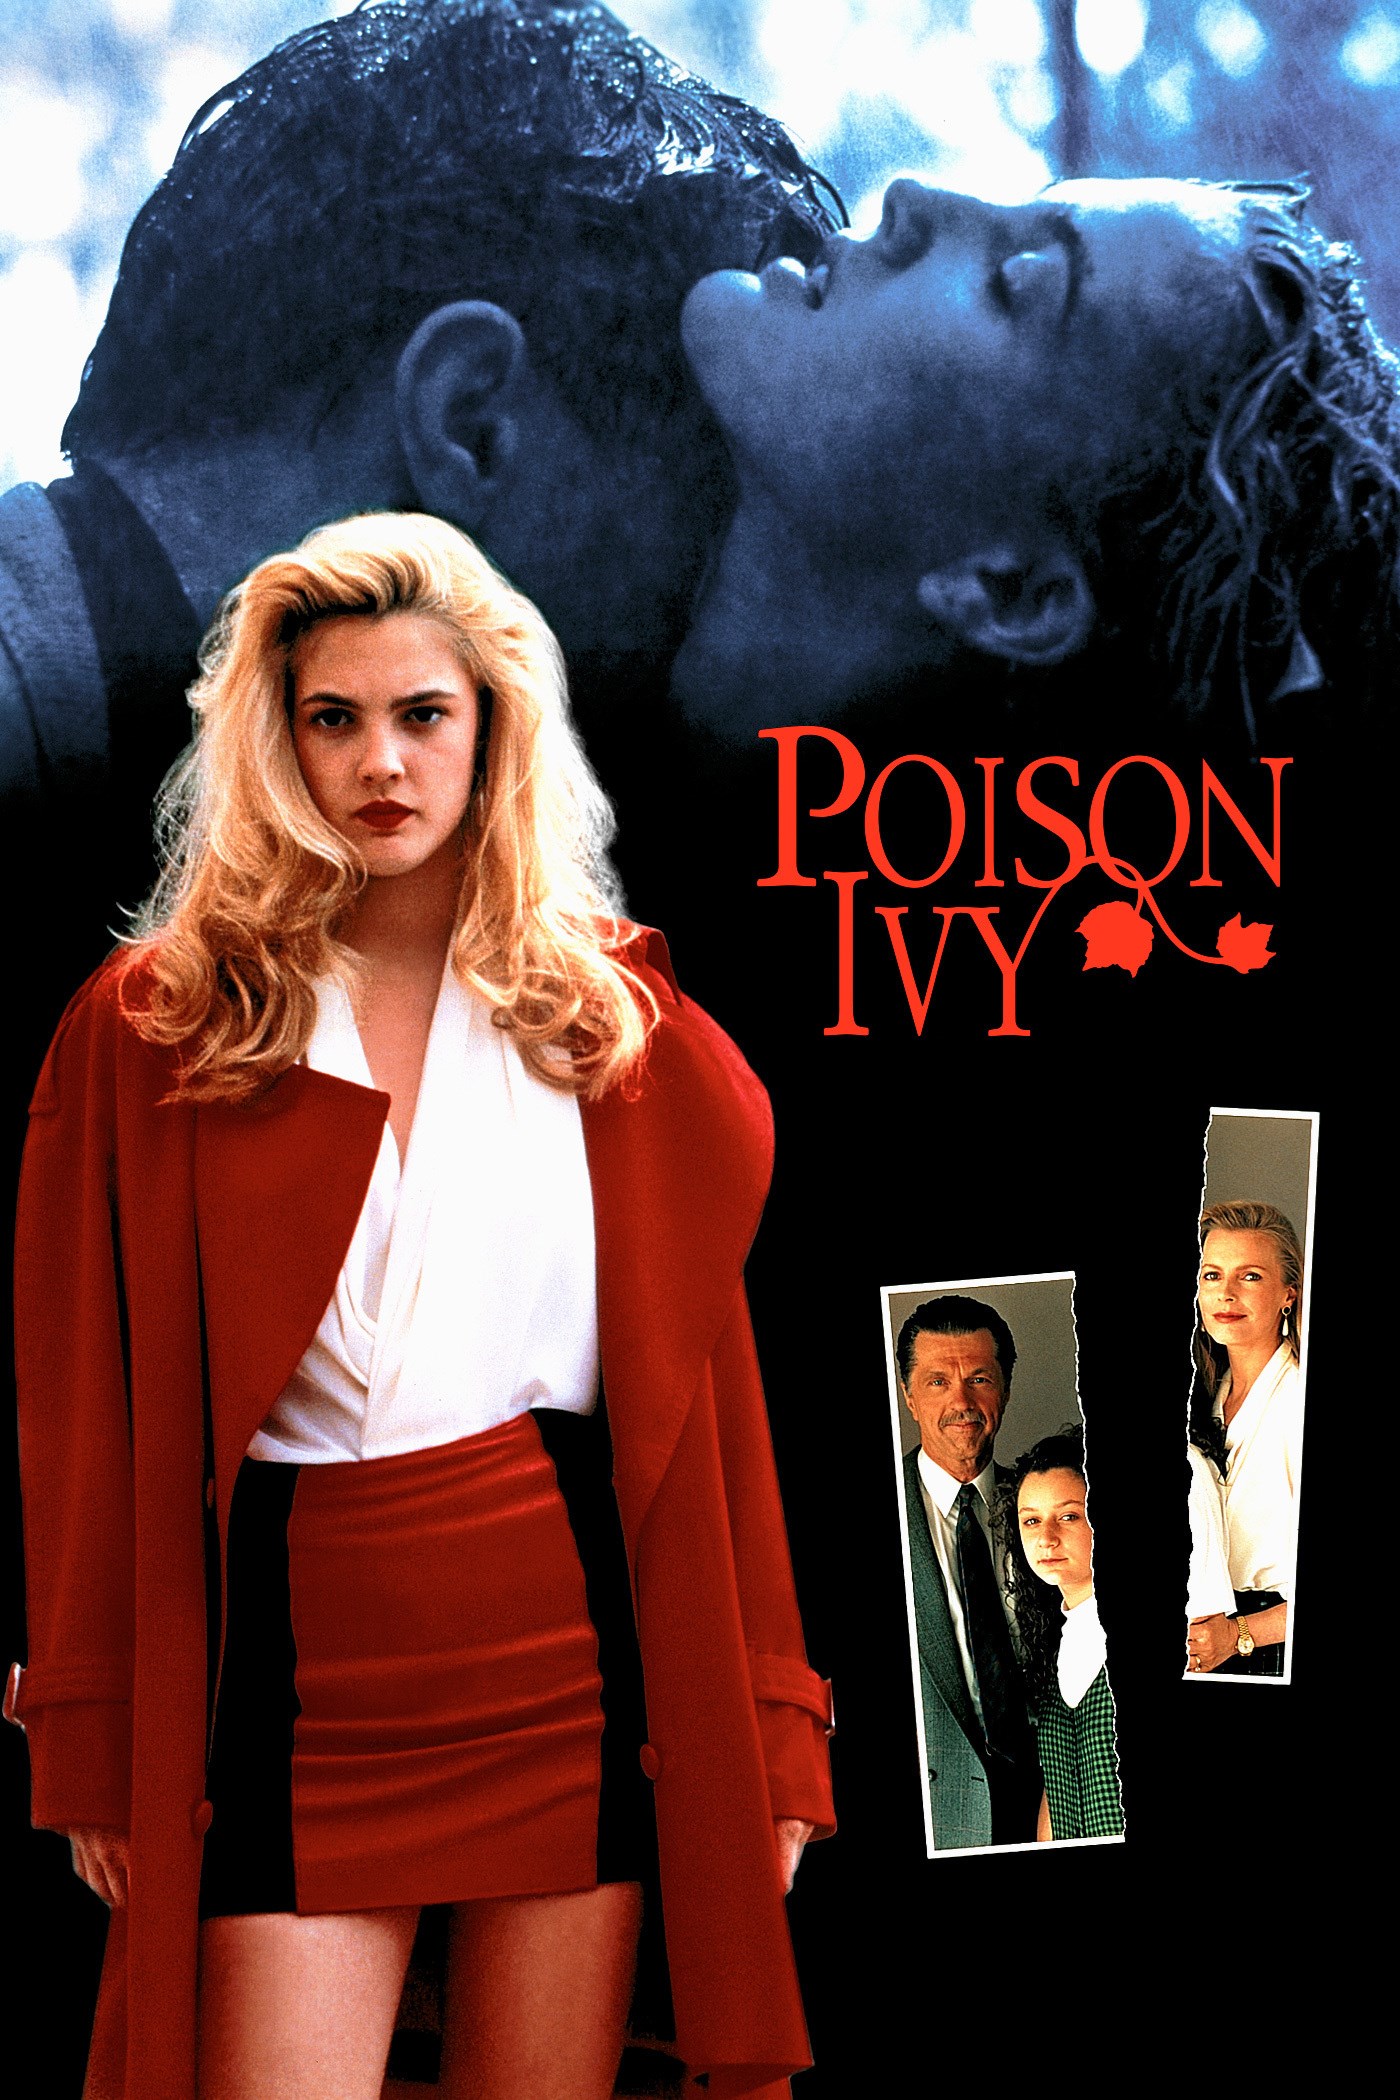 poison ivy 2 cast